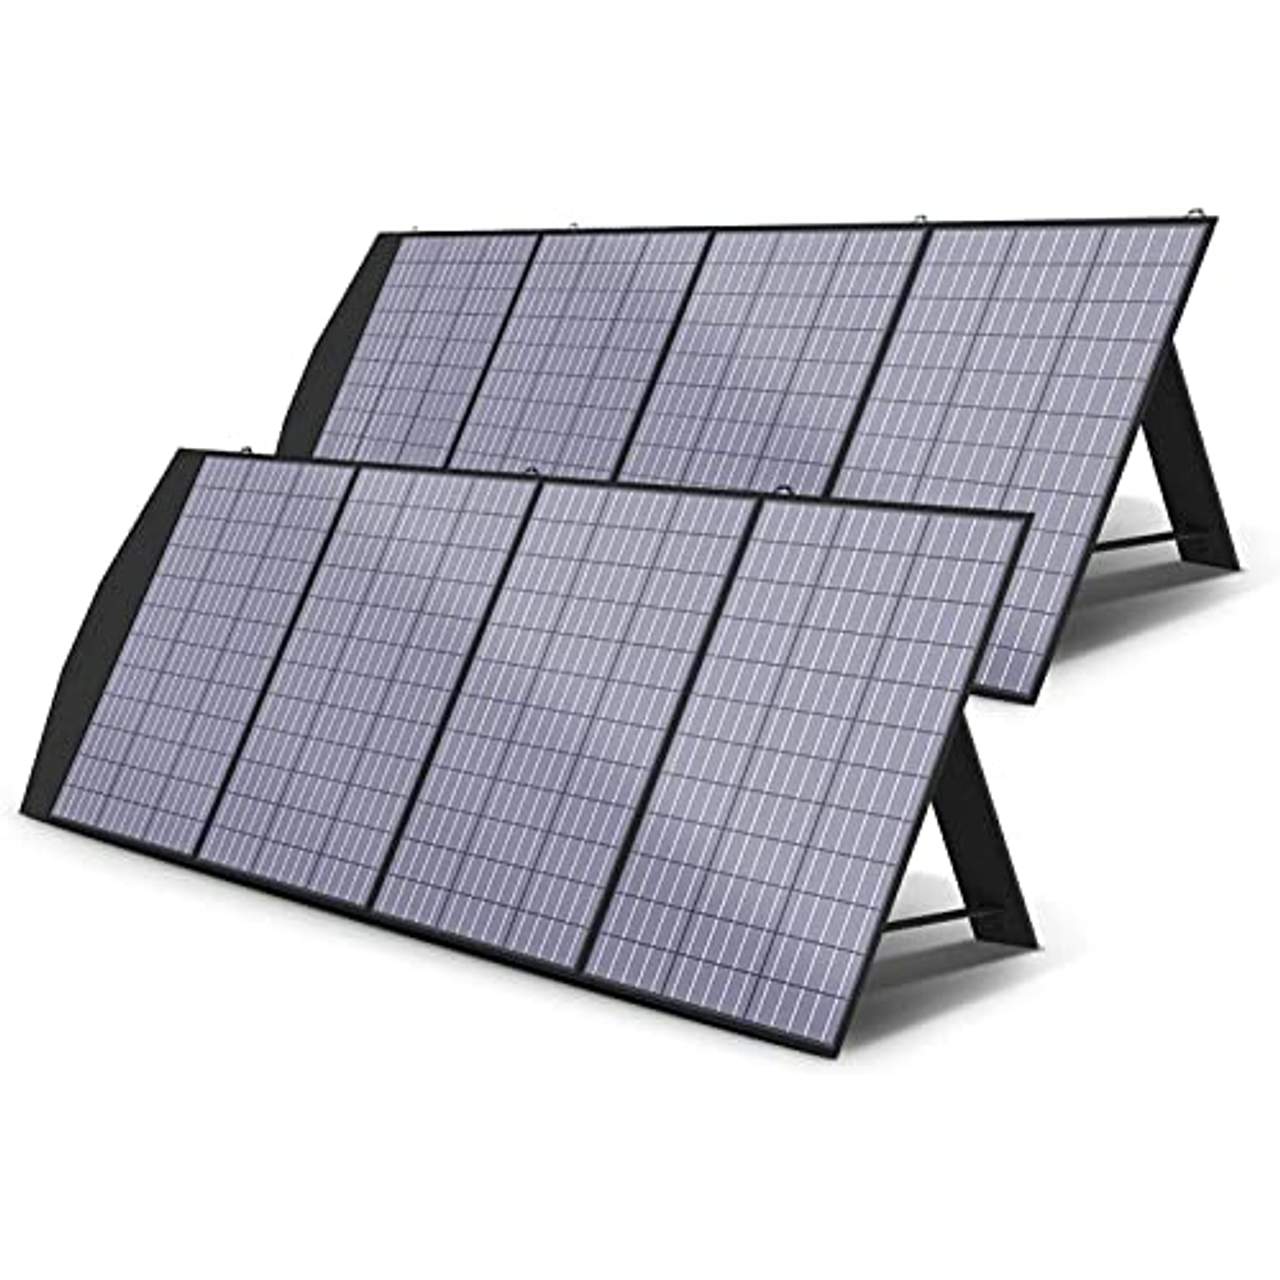 ECTIVE Solarpanel 120W 12V Solarmodul PV Modul Photovoltaik Solarzelle 120 Watt 